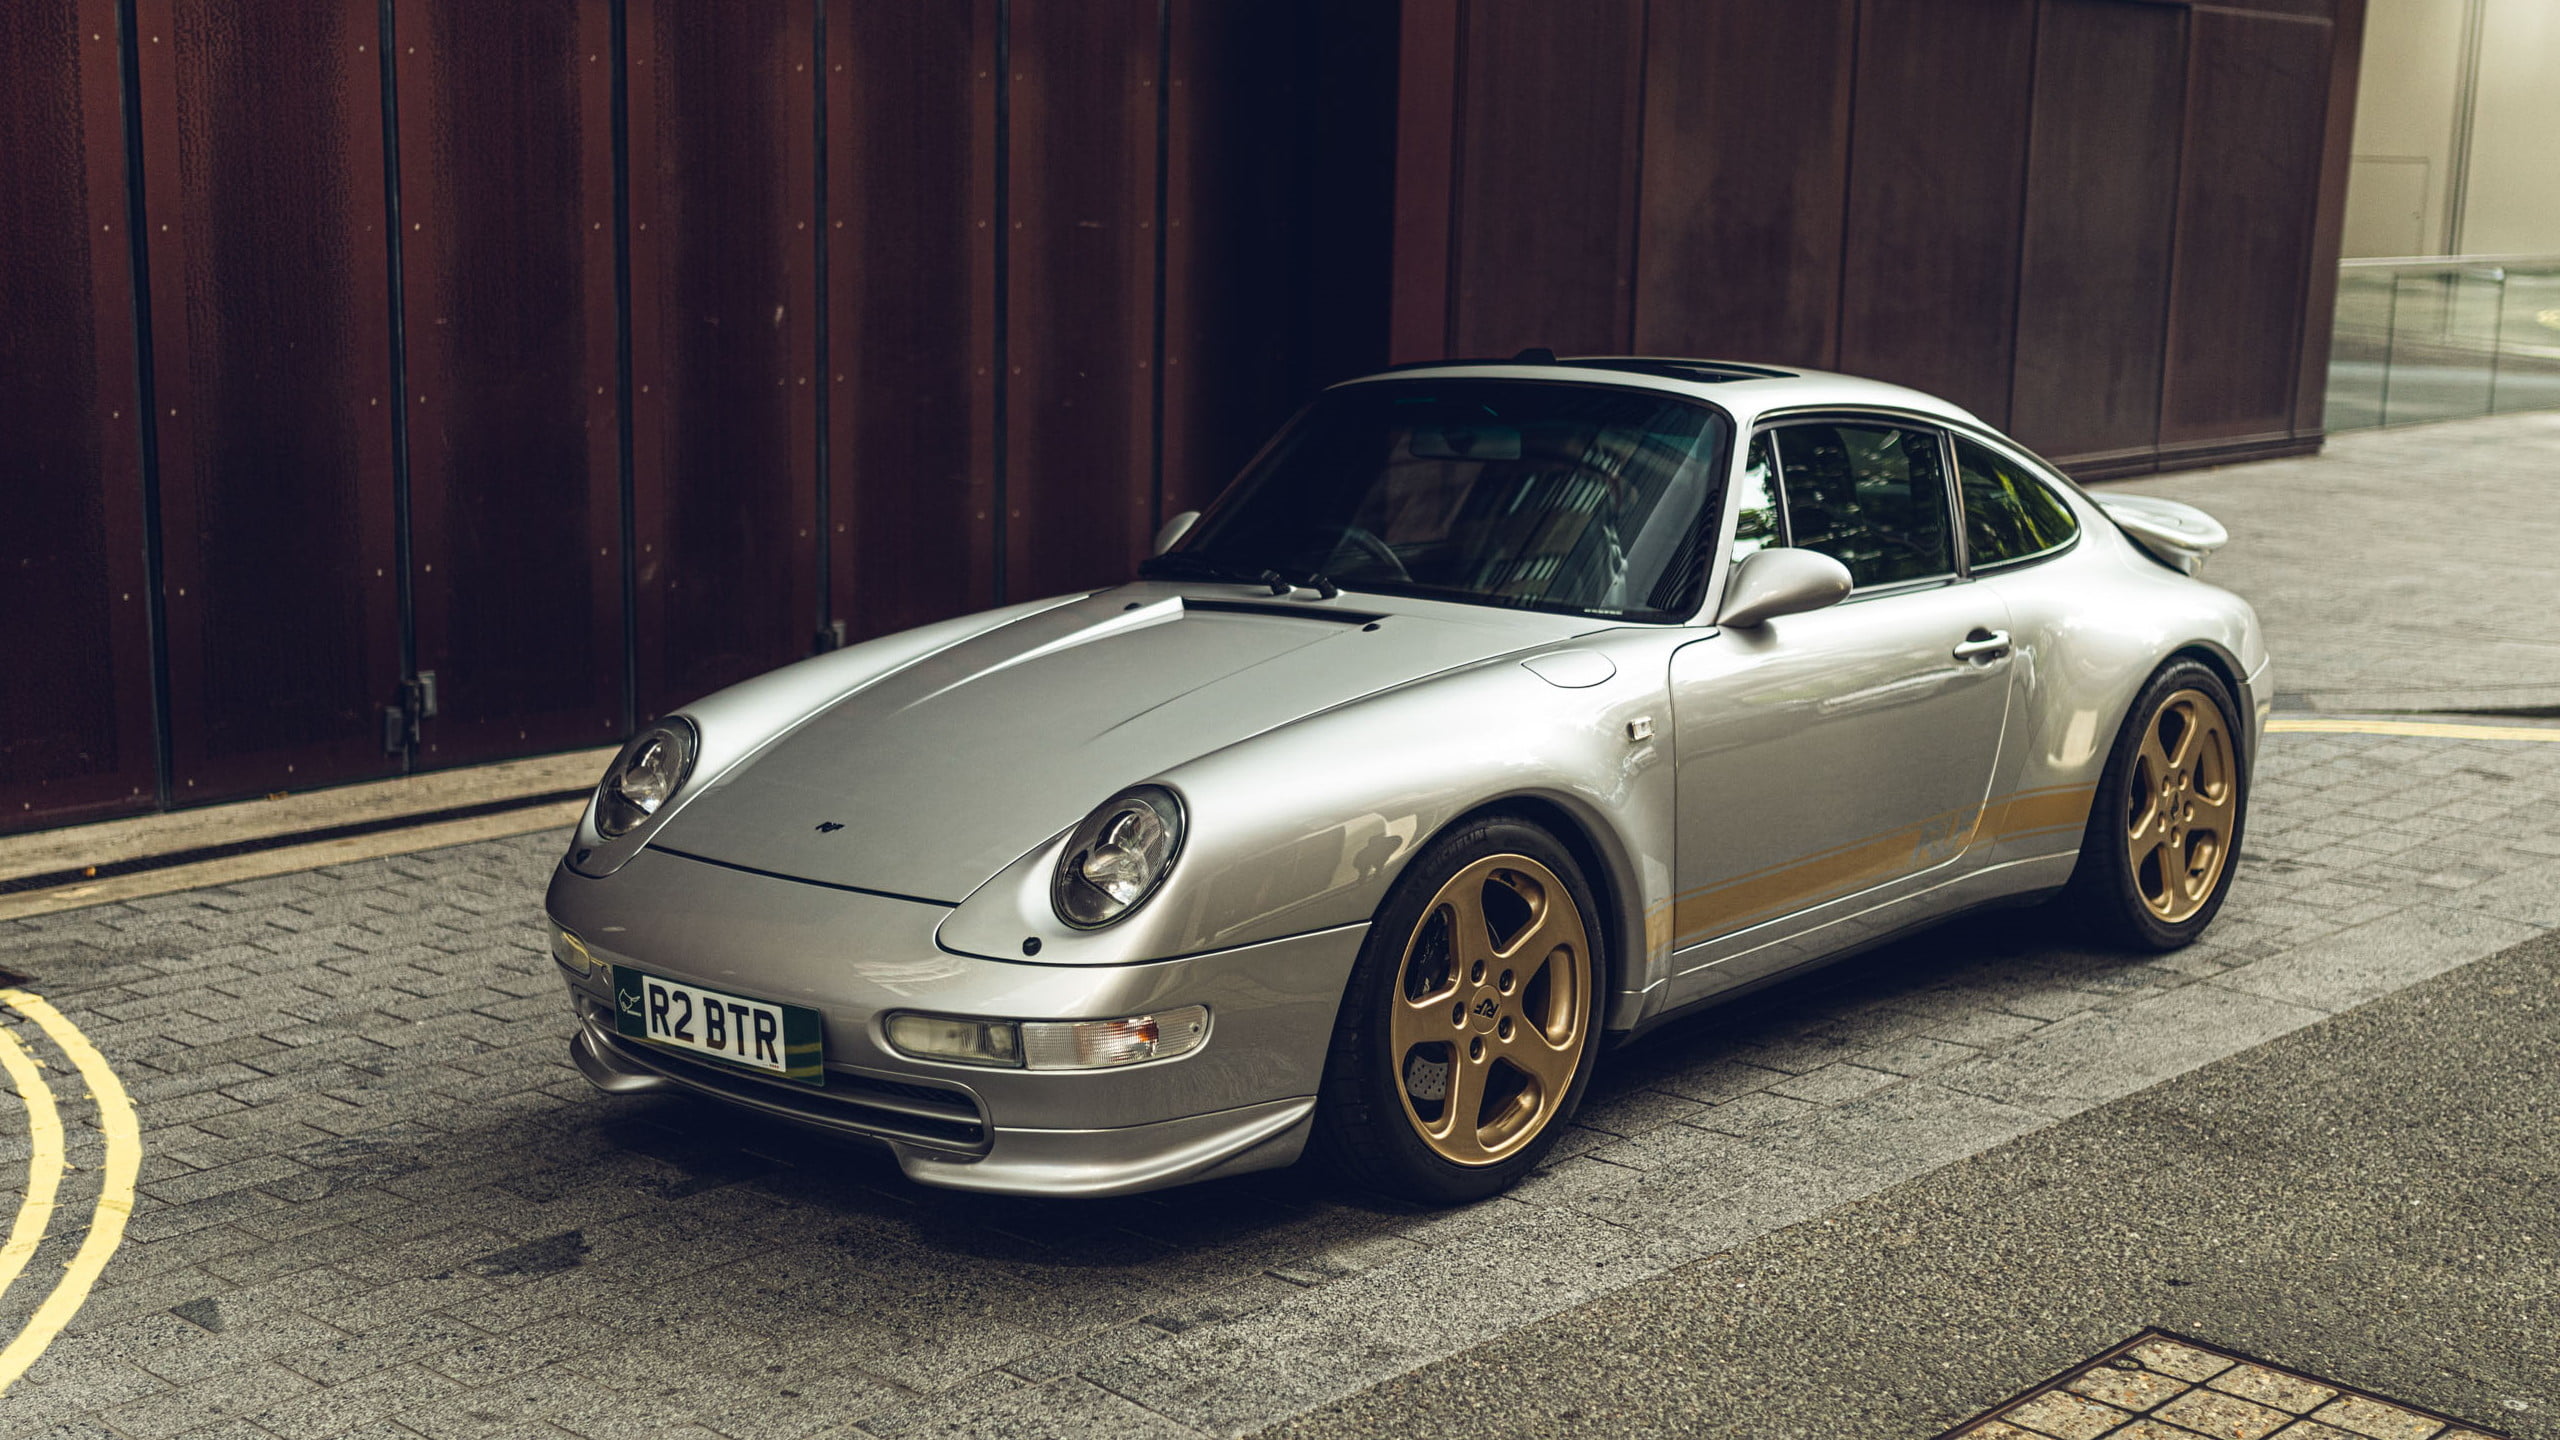 90s Cars, German cars, Porsche 993, RUF